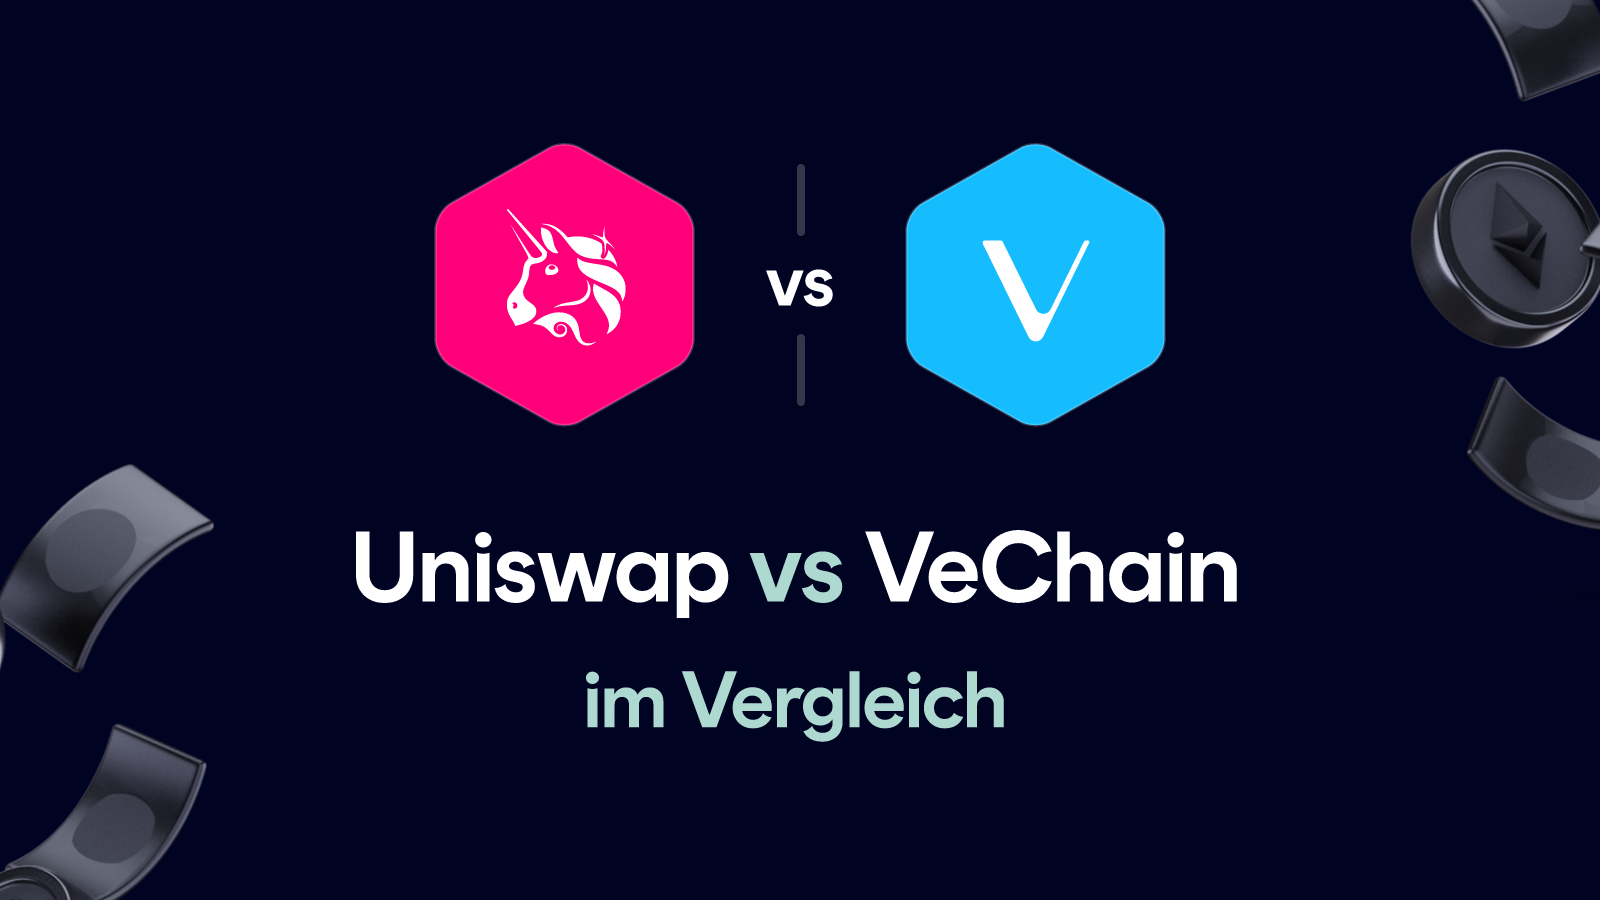 Uniswap vs VeChain